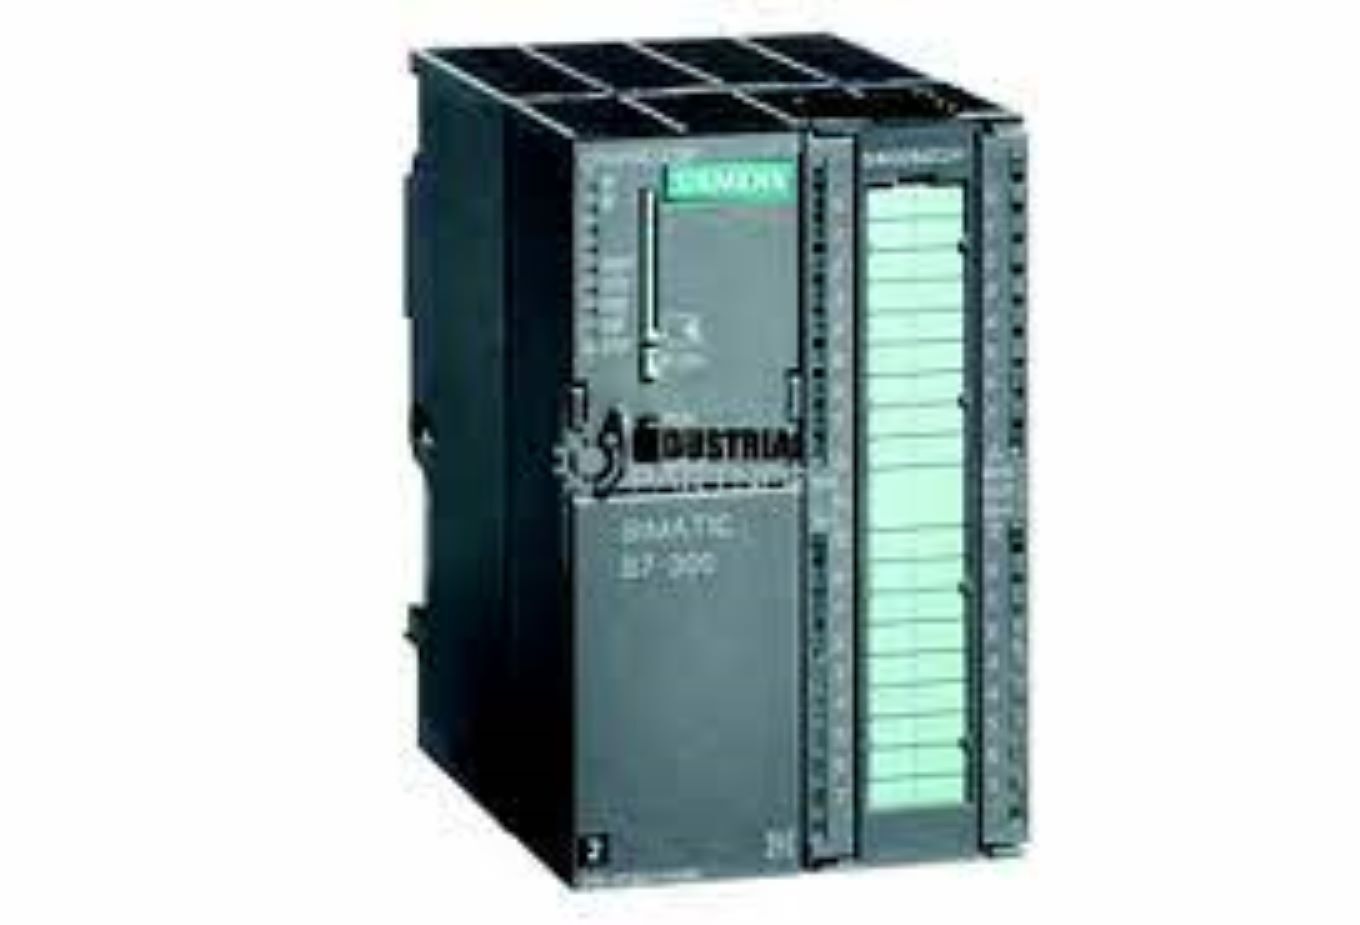 6ES7313-6CG04-0AB0- Siemens programmable logic controller